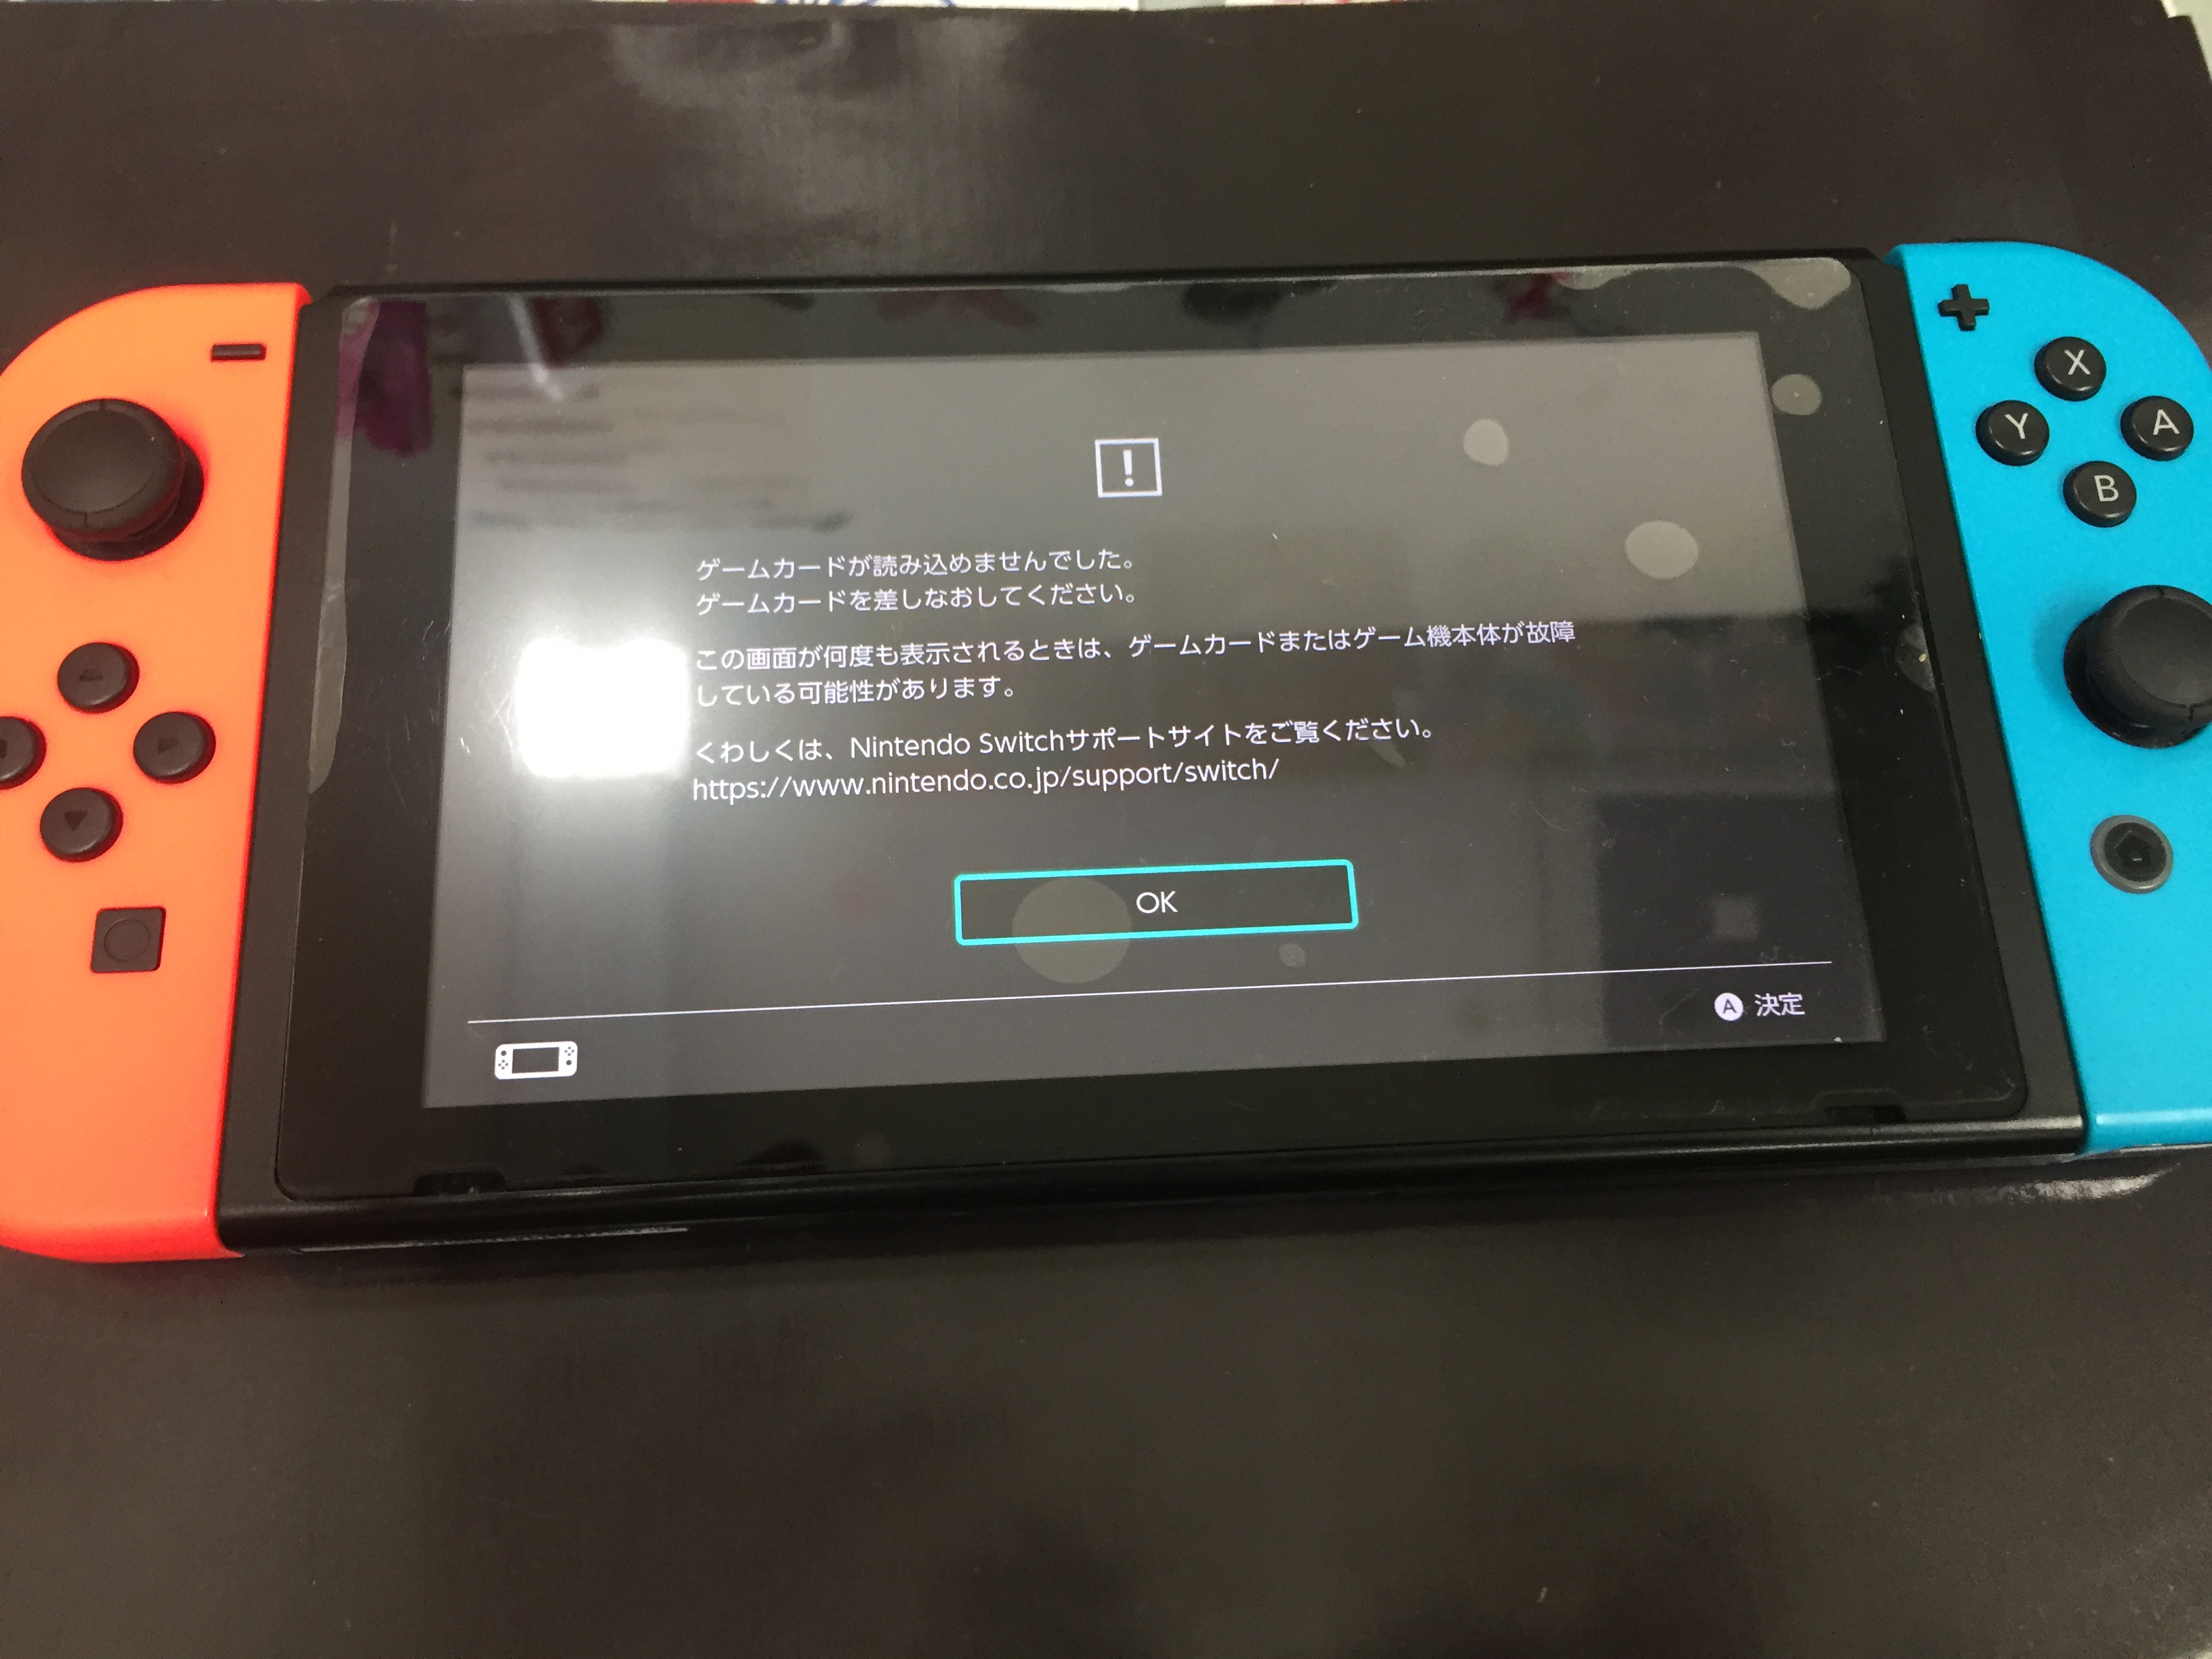 Switchのカセットが読み込めない 実は ただの 汚れ Nintendo3ds Switch Psp 修理のゲームホスピタル Nintendo3ds ニンテンドーds Psp Switch 修理